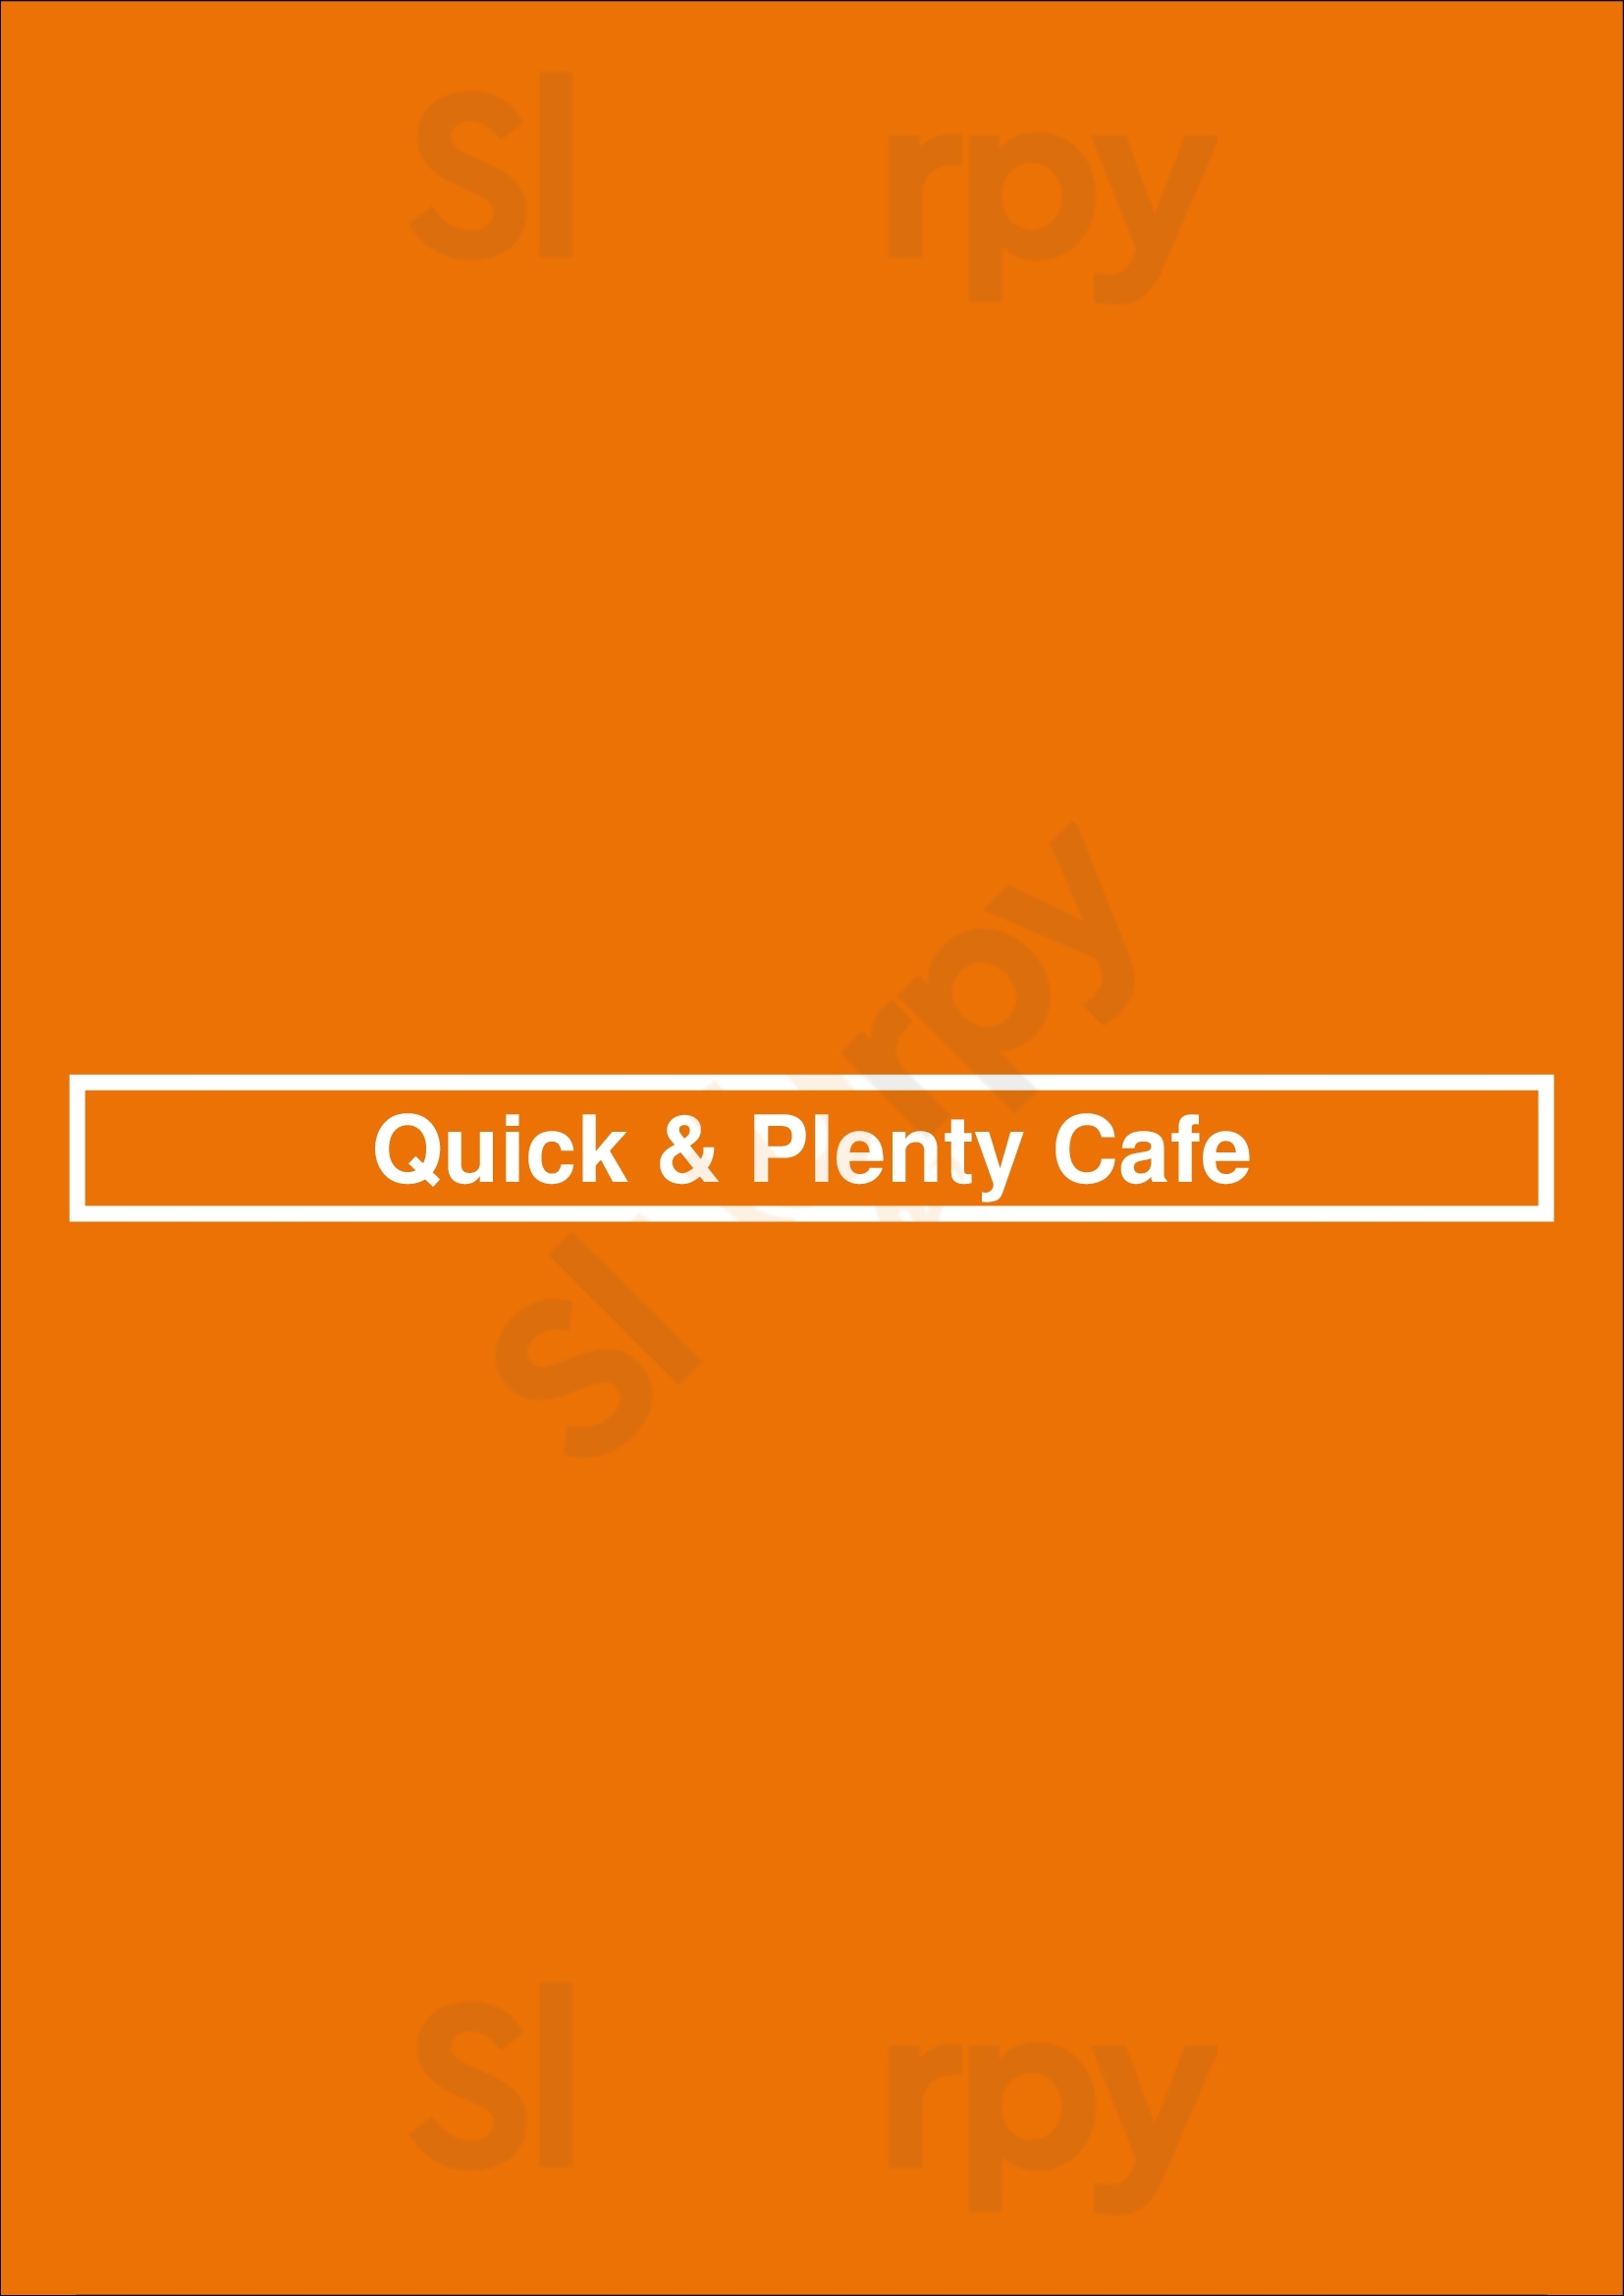 Quick & Plenty Cafe Edinburgh Menu - 1